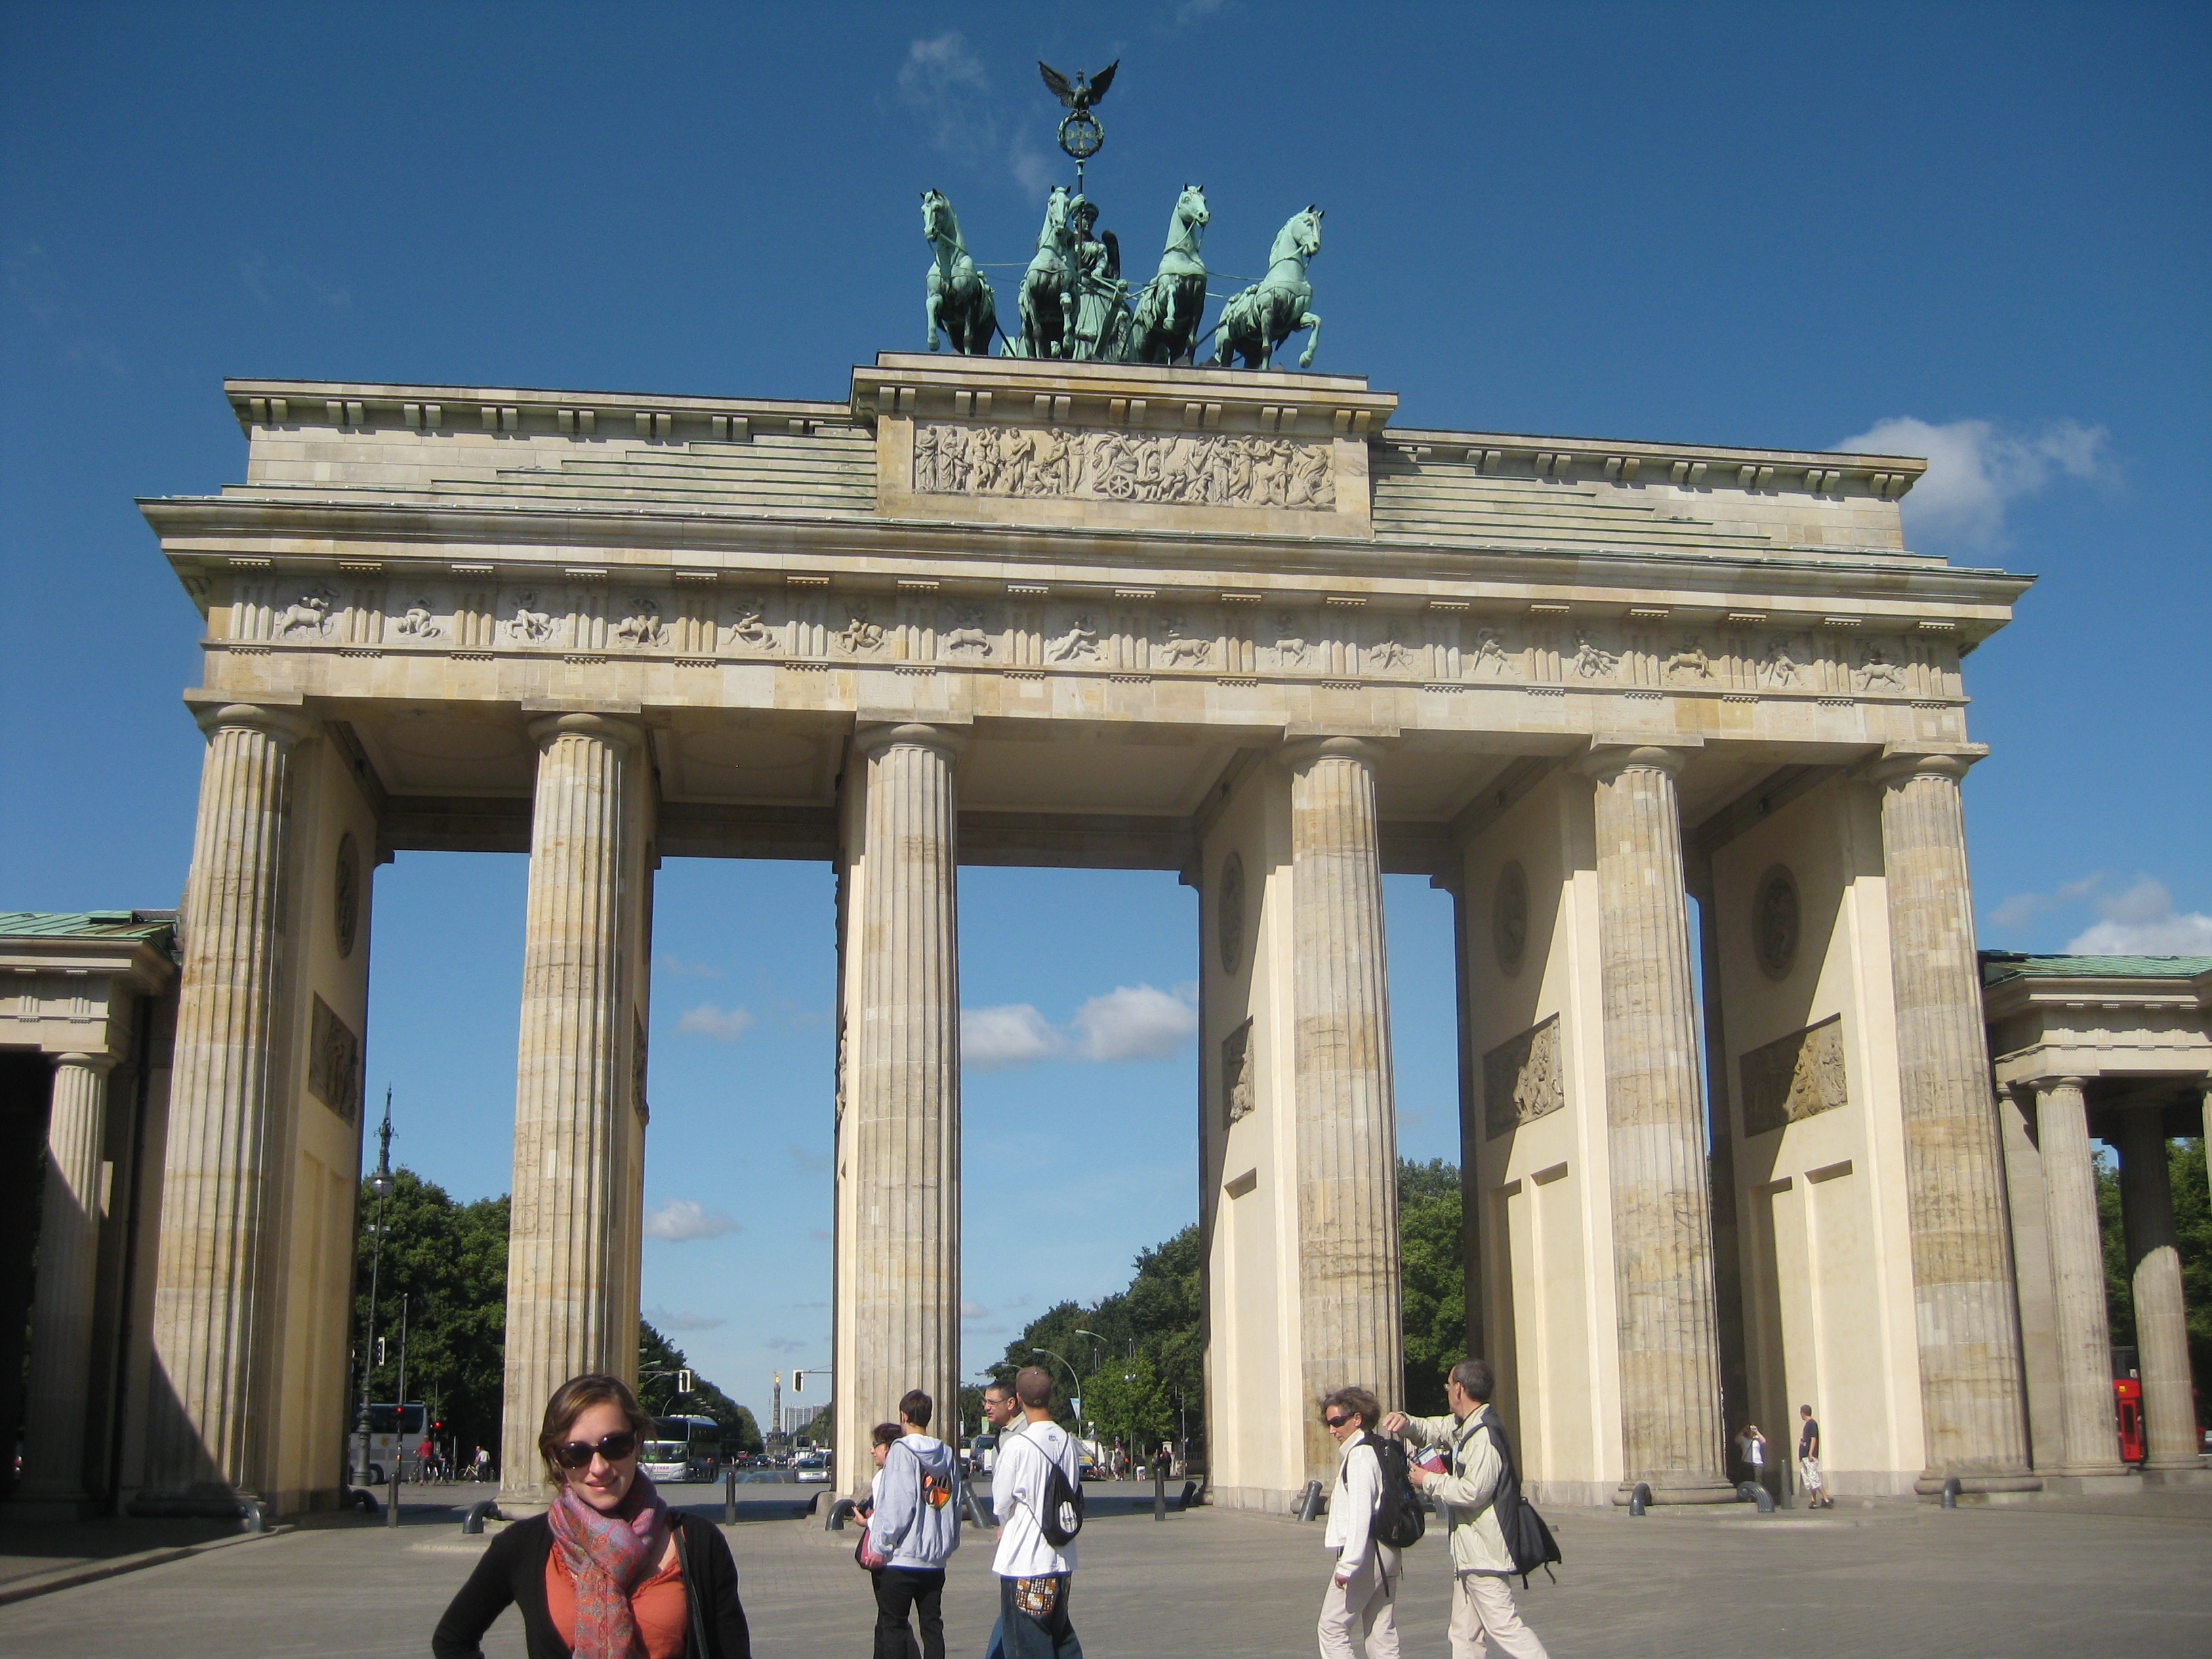 in front of the Brandenburg Gate